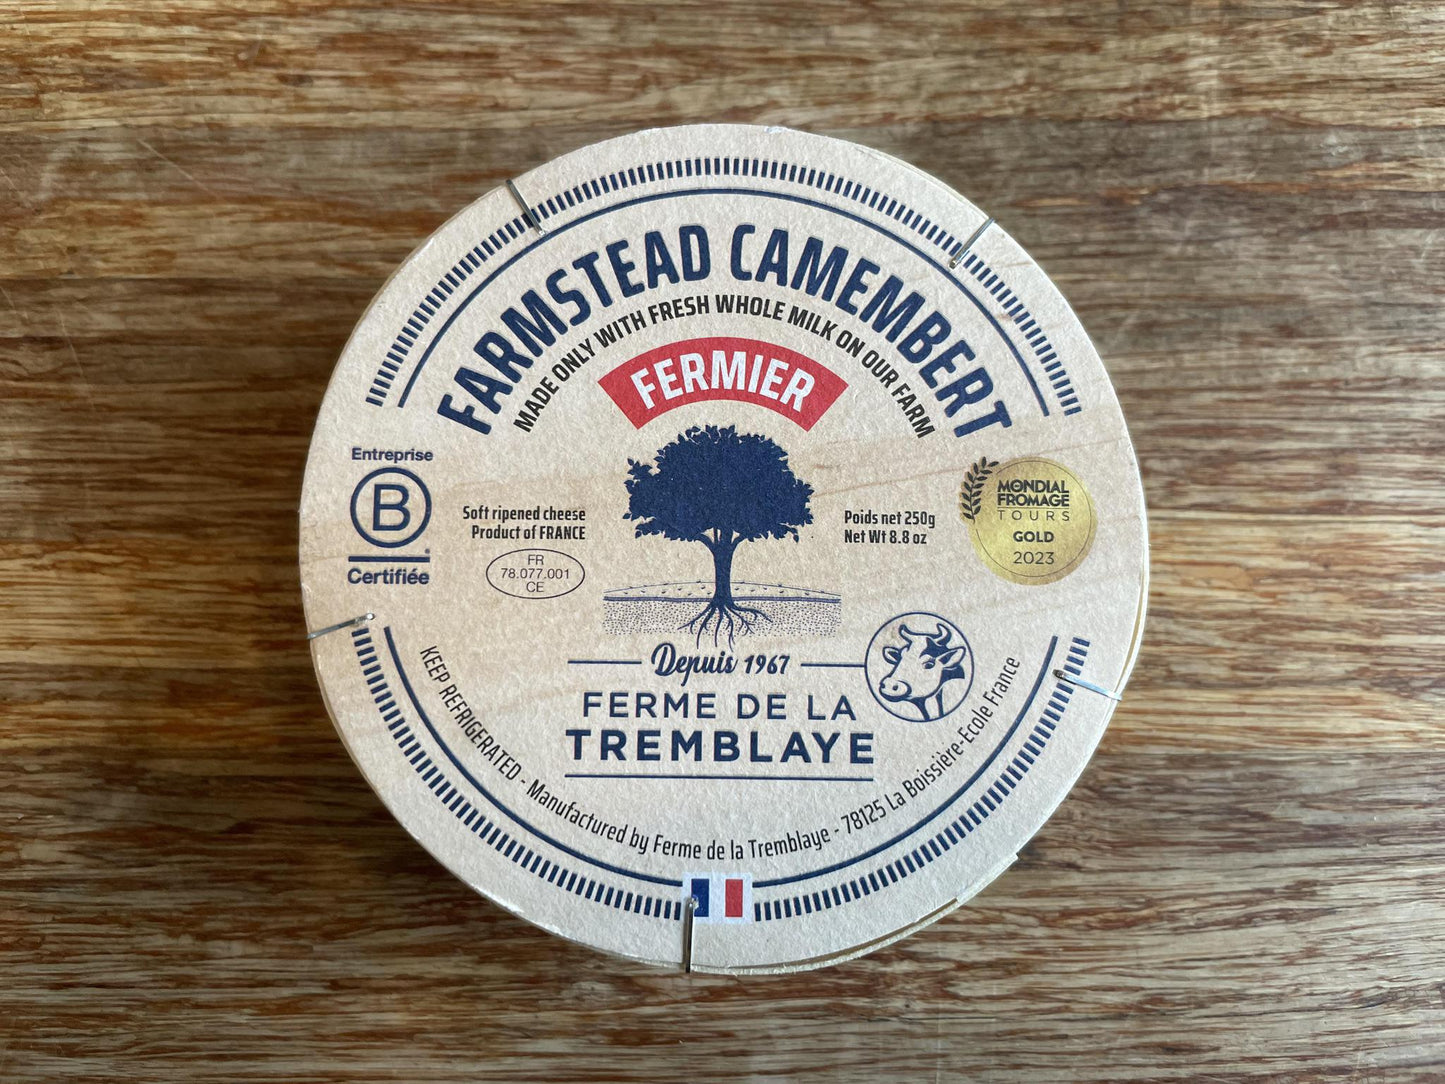 Farmstand Camembert Fermier Cheese 8.8oz - Ferme de la Tremblaye